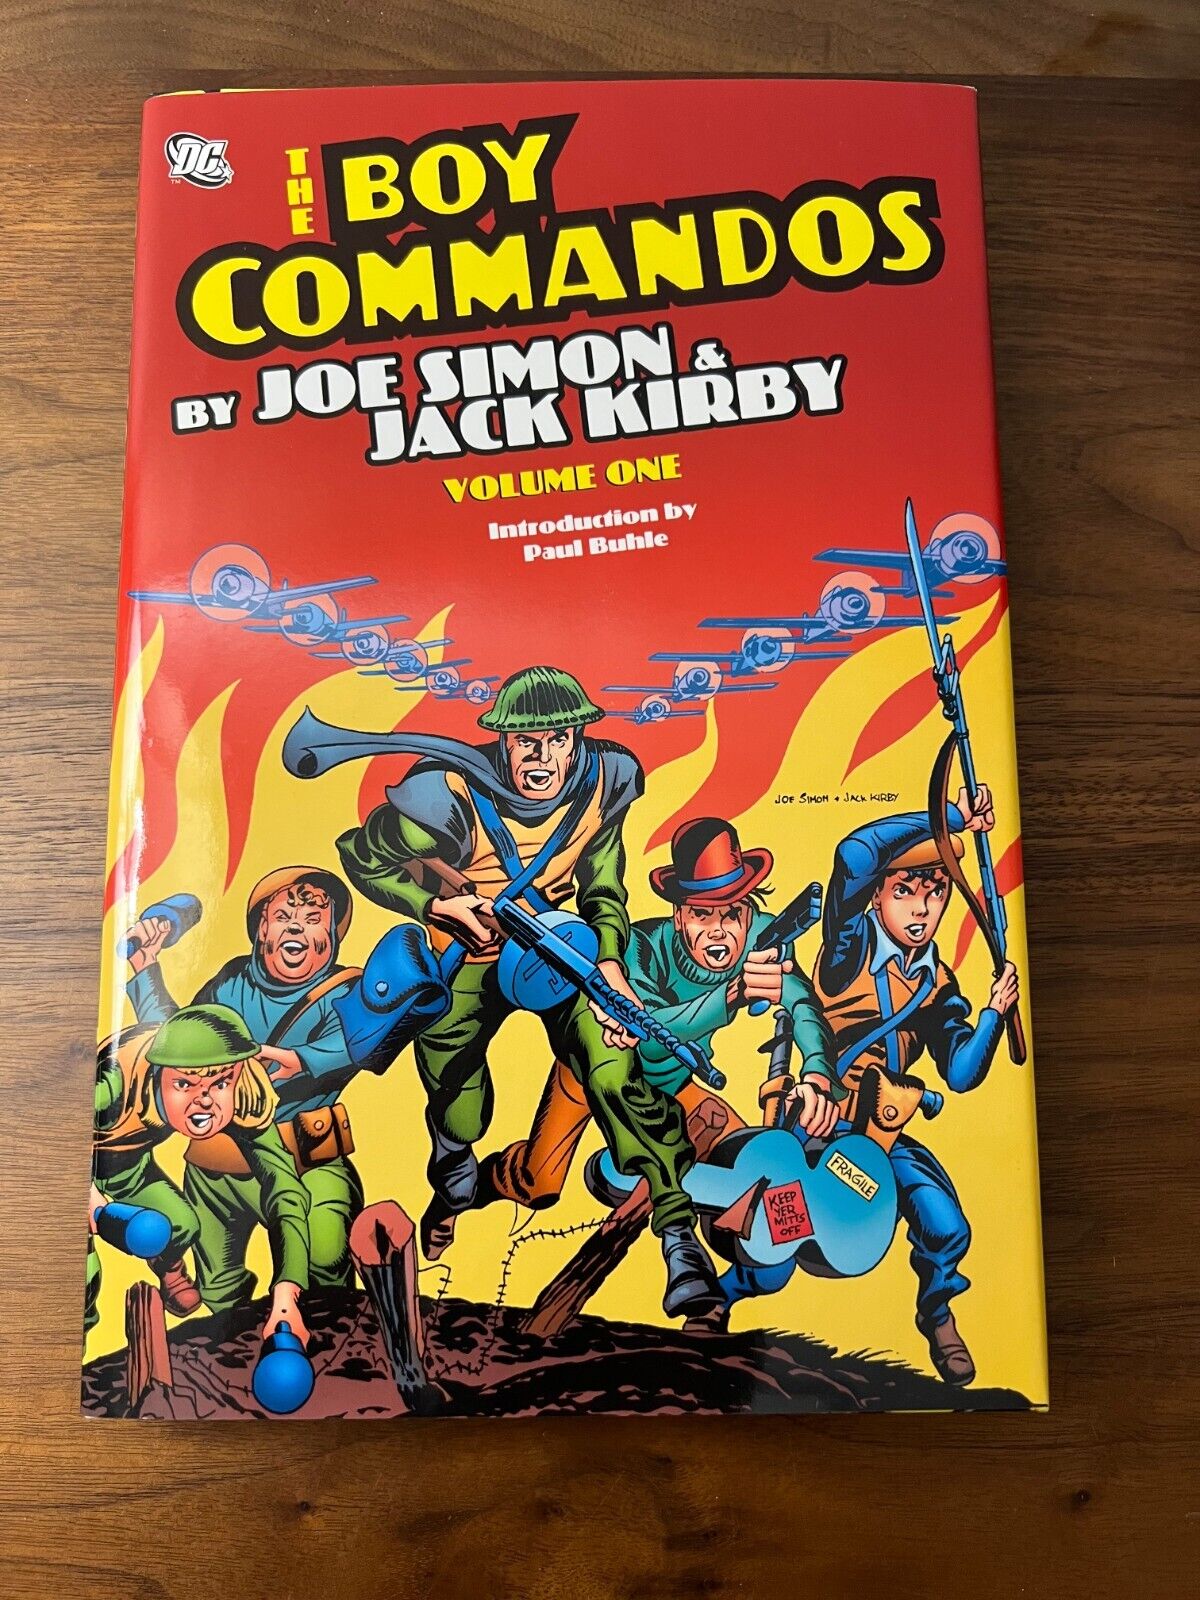 The Boy Commandos by Joe Simon and Jack Kirby Vol 1 - Hardcover